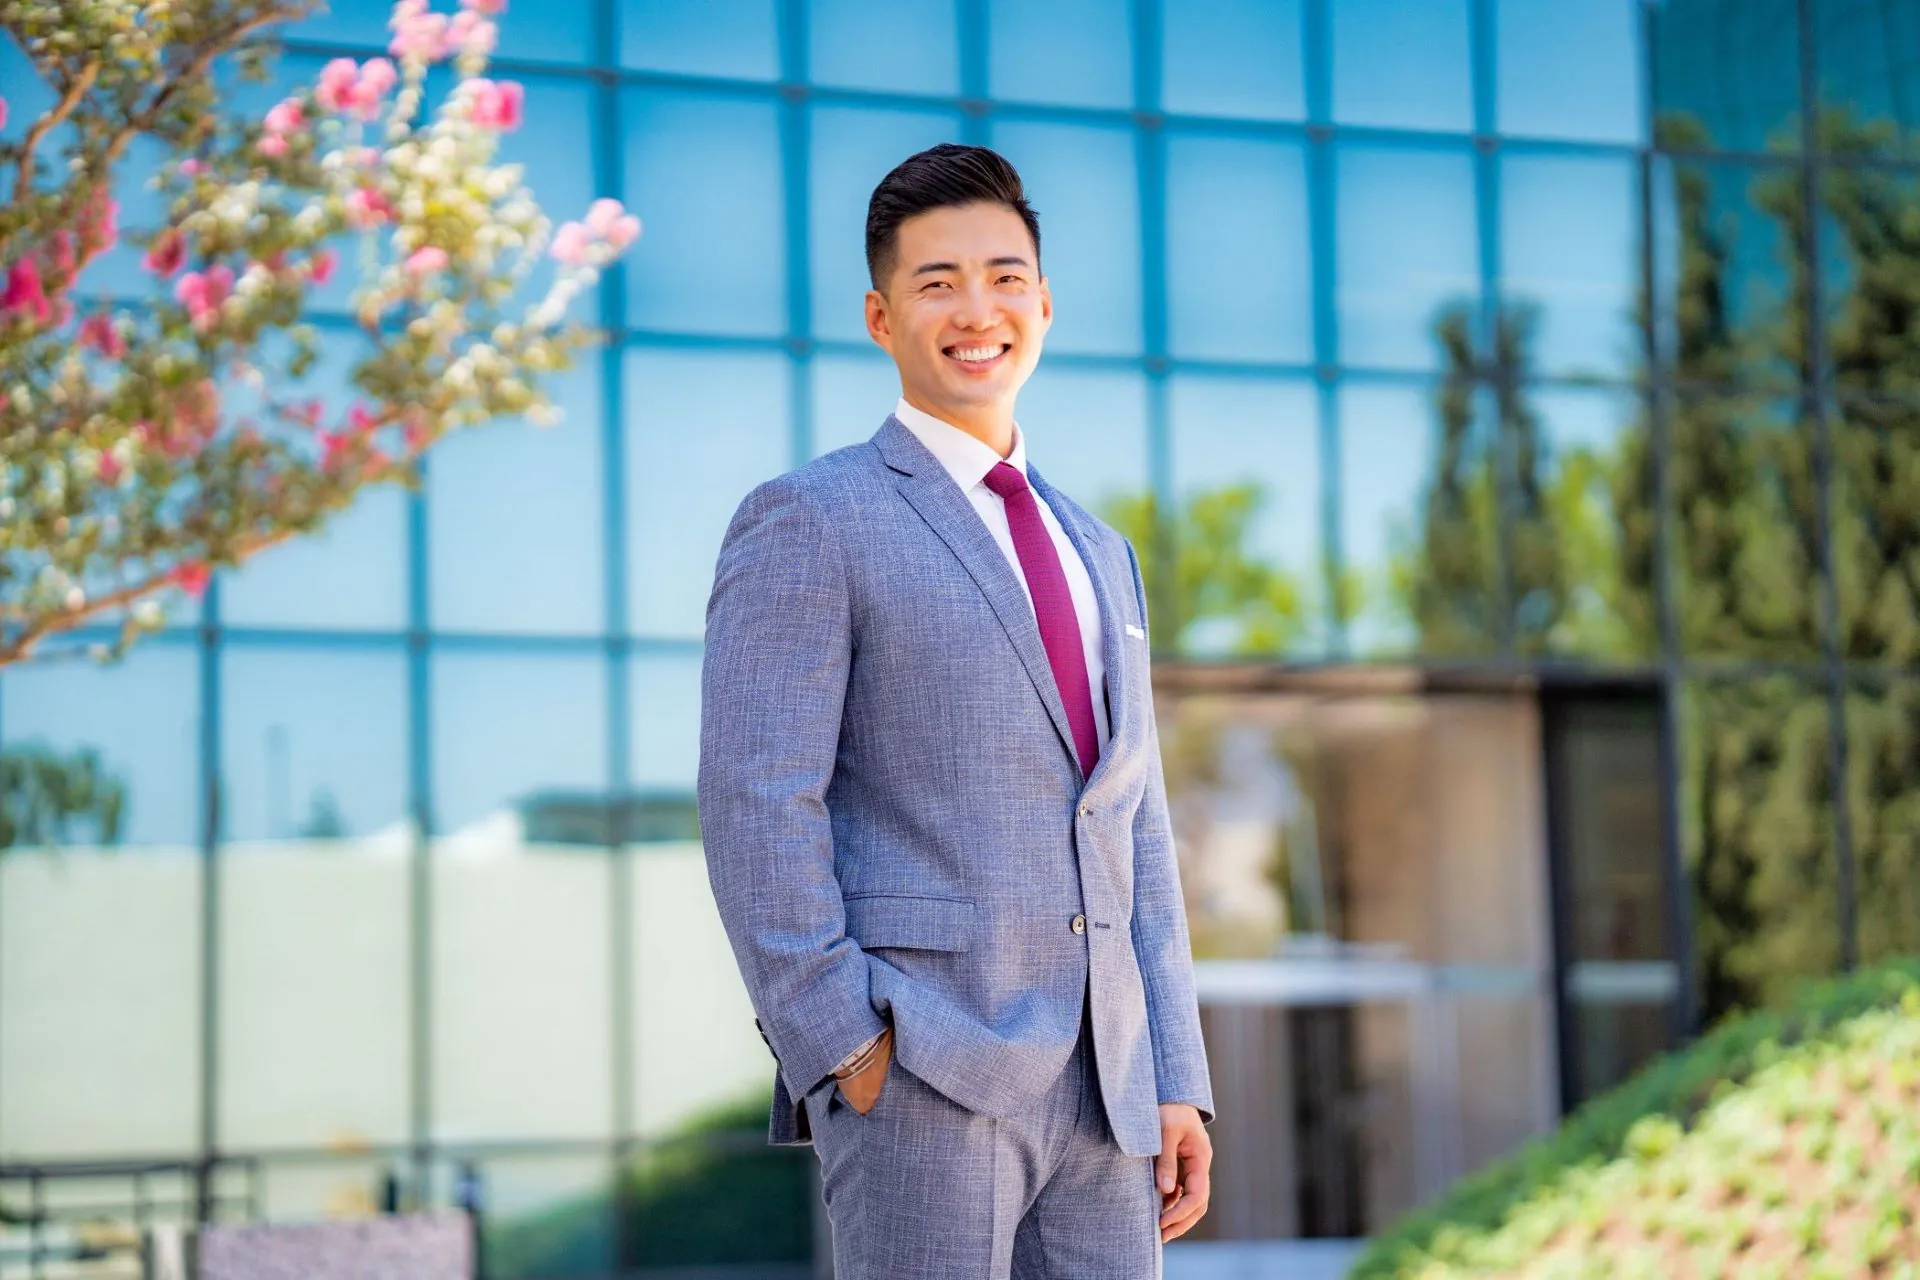 Daniel Kim is an award-winning California accident attorney